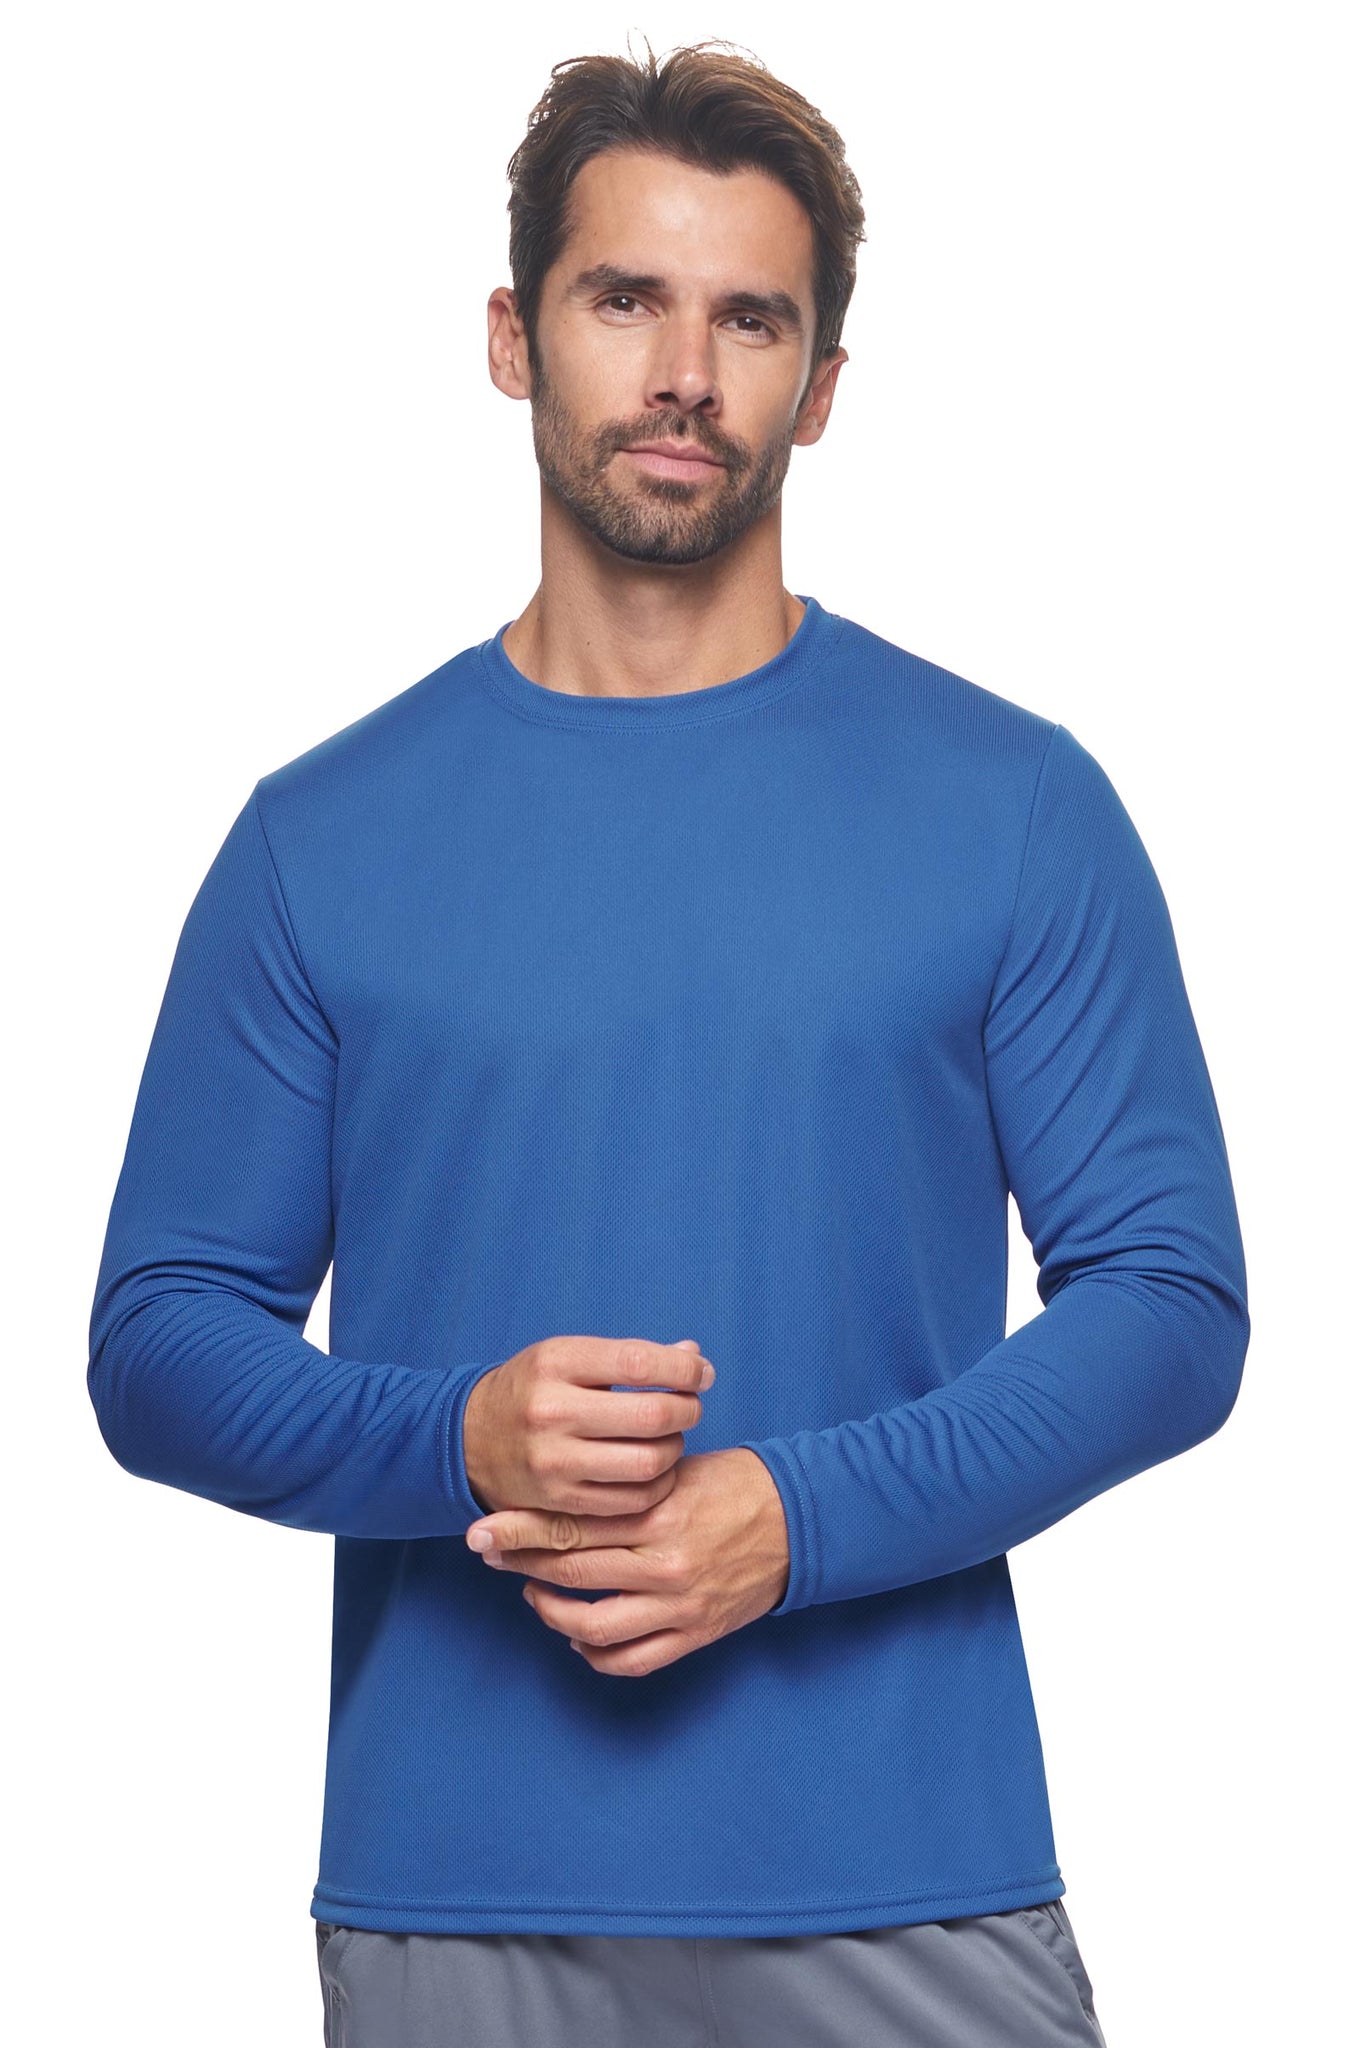 Expert Brand Wholesale Men's Oxymesh Performance Long Sleeve Tec Tee Made in USA AJ901D Royal Blue#royal-blue